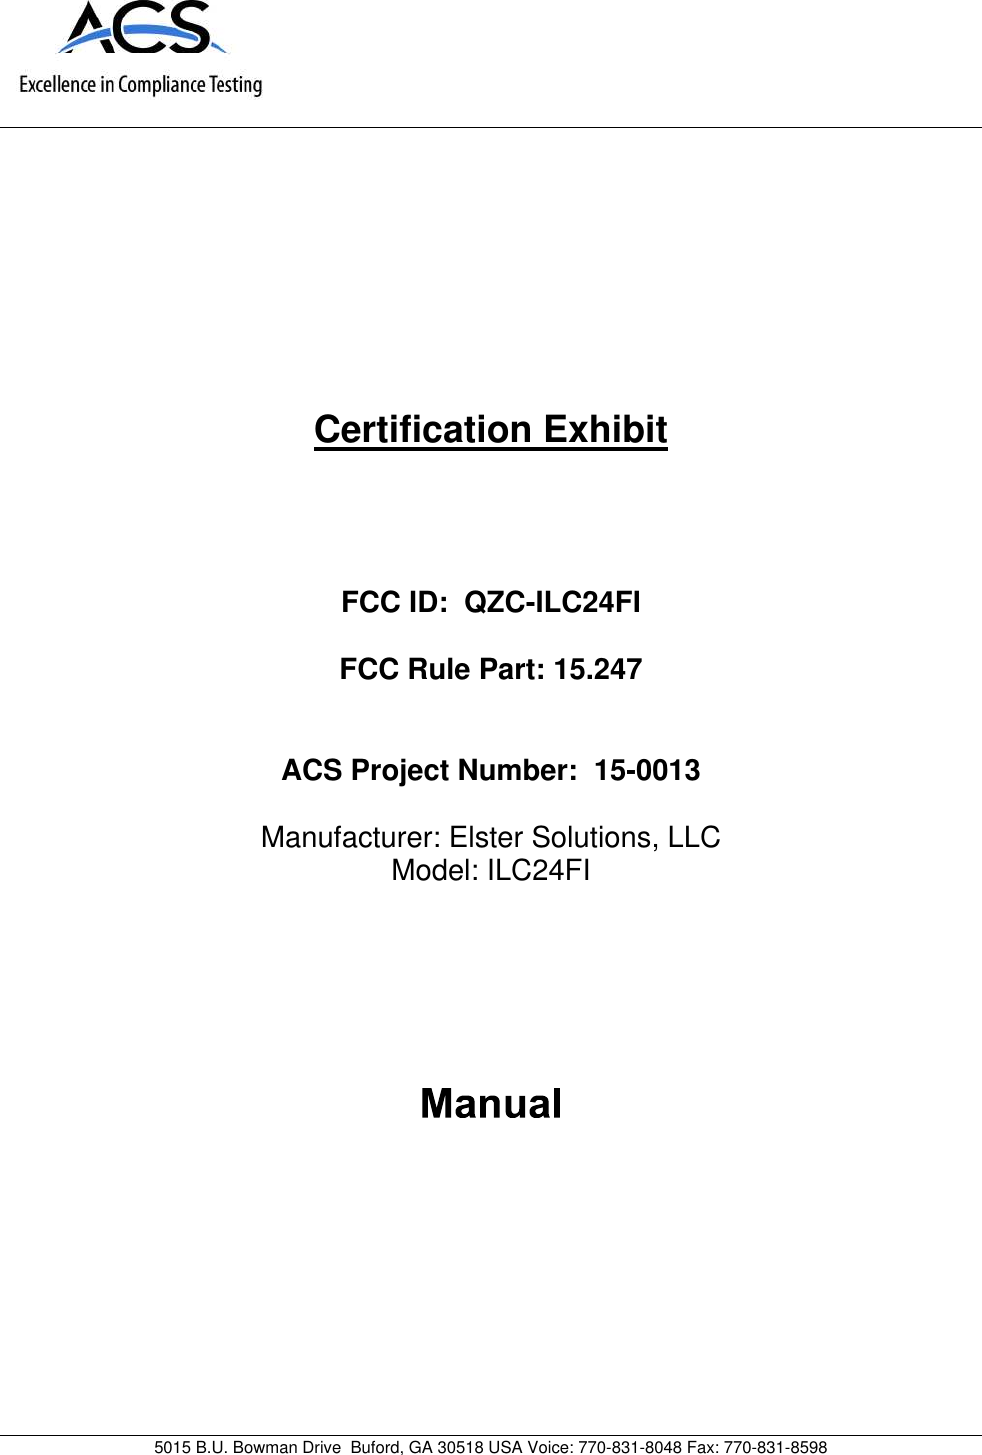 5015 B.U. Bowman Drive Buford, GA 30518 USA Voice: 770-831-8048 Fax: 770-831-8598Certification ExhibitFCC ID: QZC-ILC24FIFCC Rule Part: 15.247ACS Project Number: 15-0013Manufacturer: Elster Solutions, LLCModel: ILC24FI